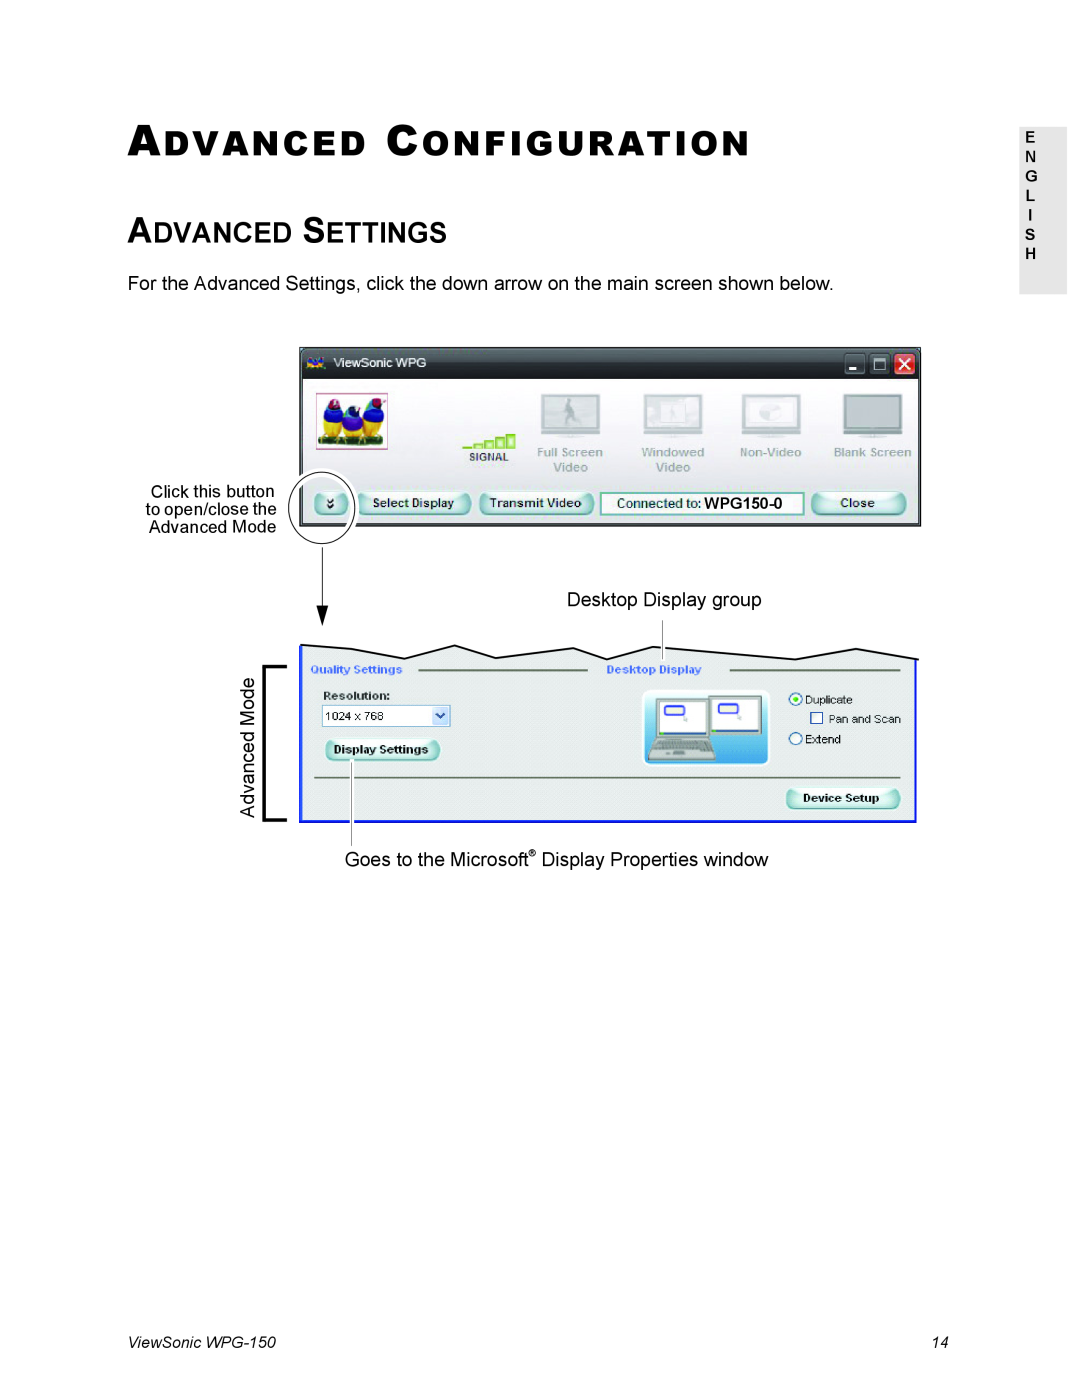 ViewSonic WPG-150 Advanced Configuration, Advanced Settings, Click this button, Advanced Mode, E N G L I S H, WPG150-0 